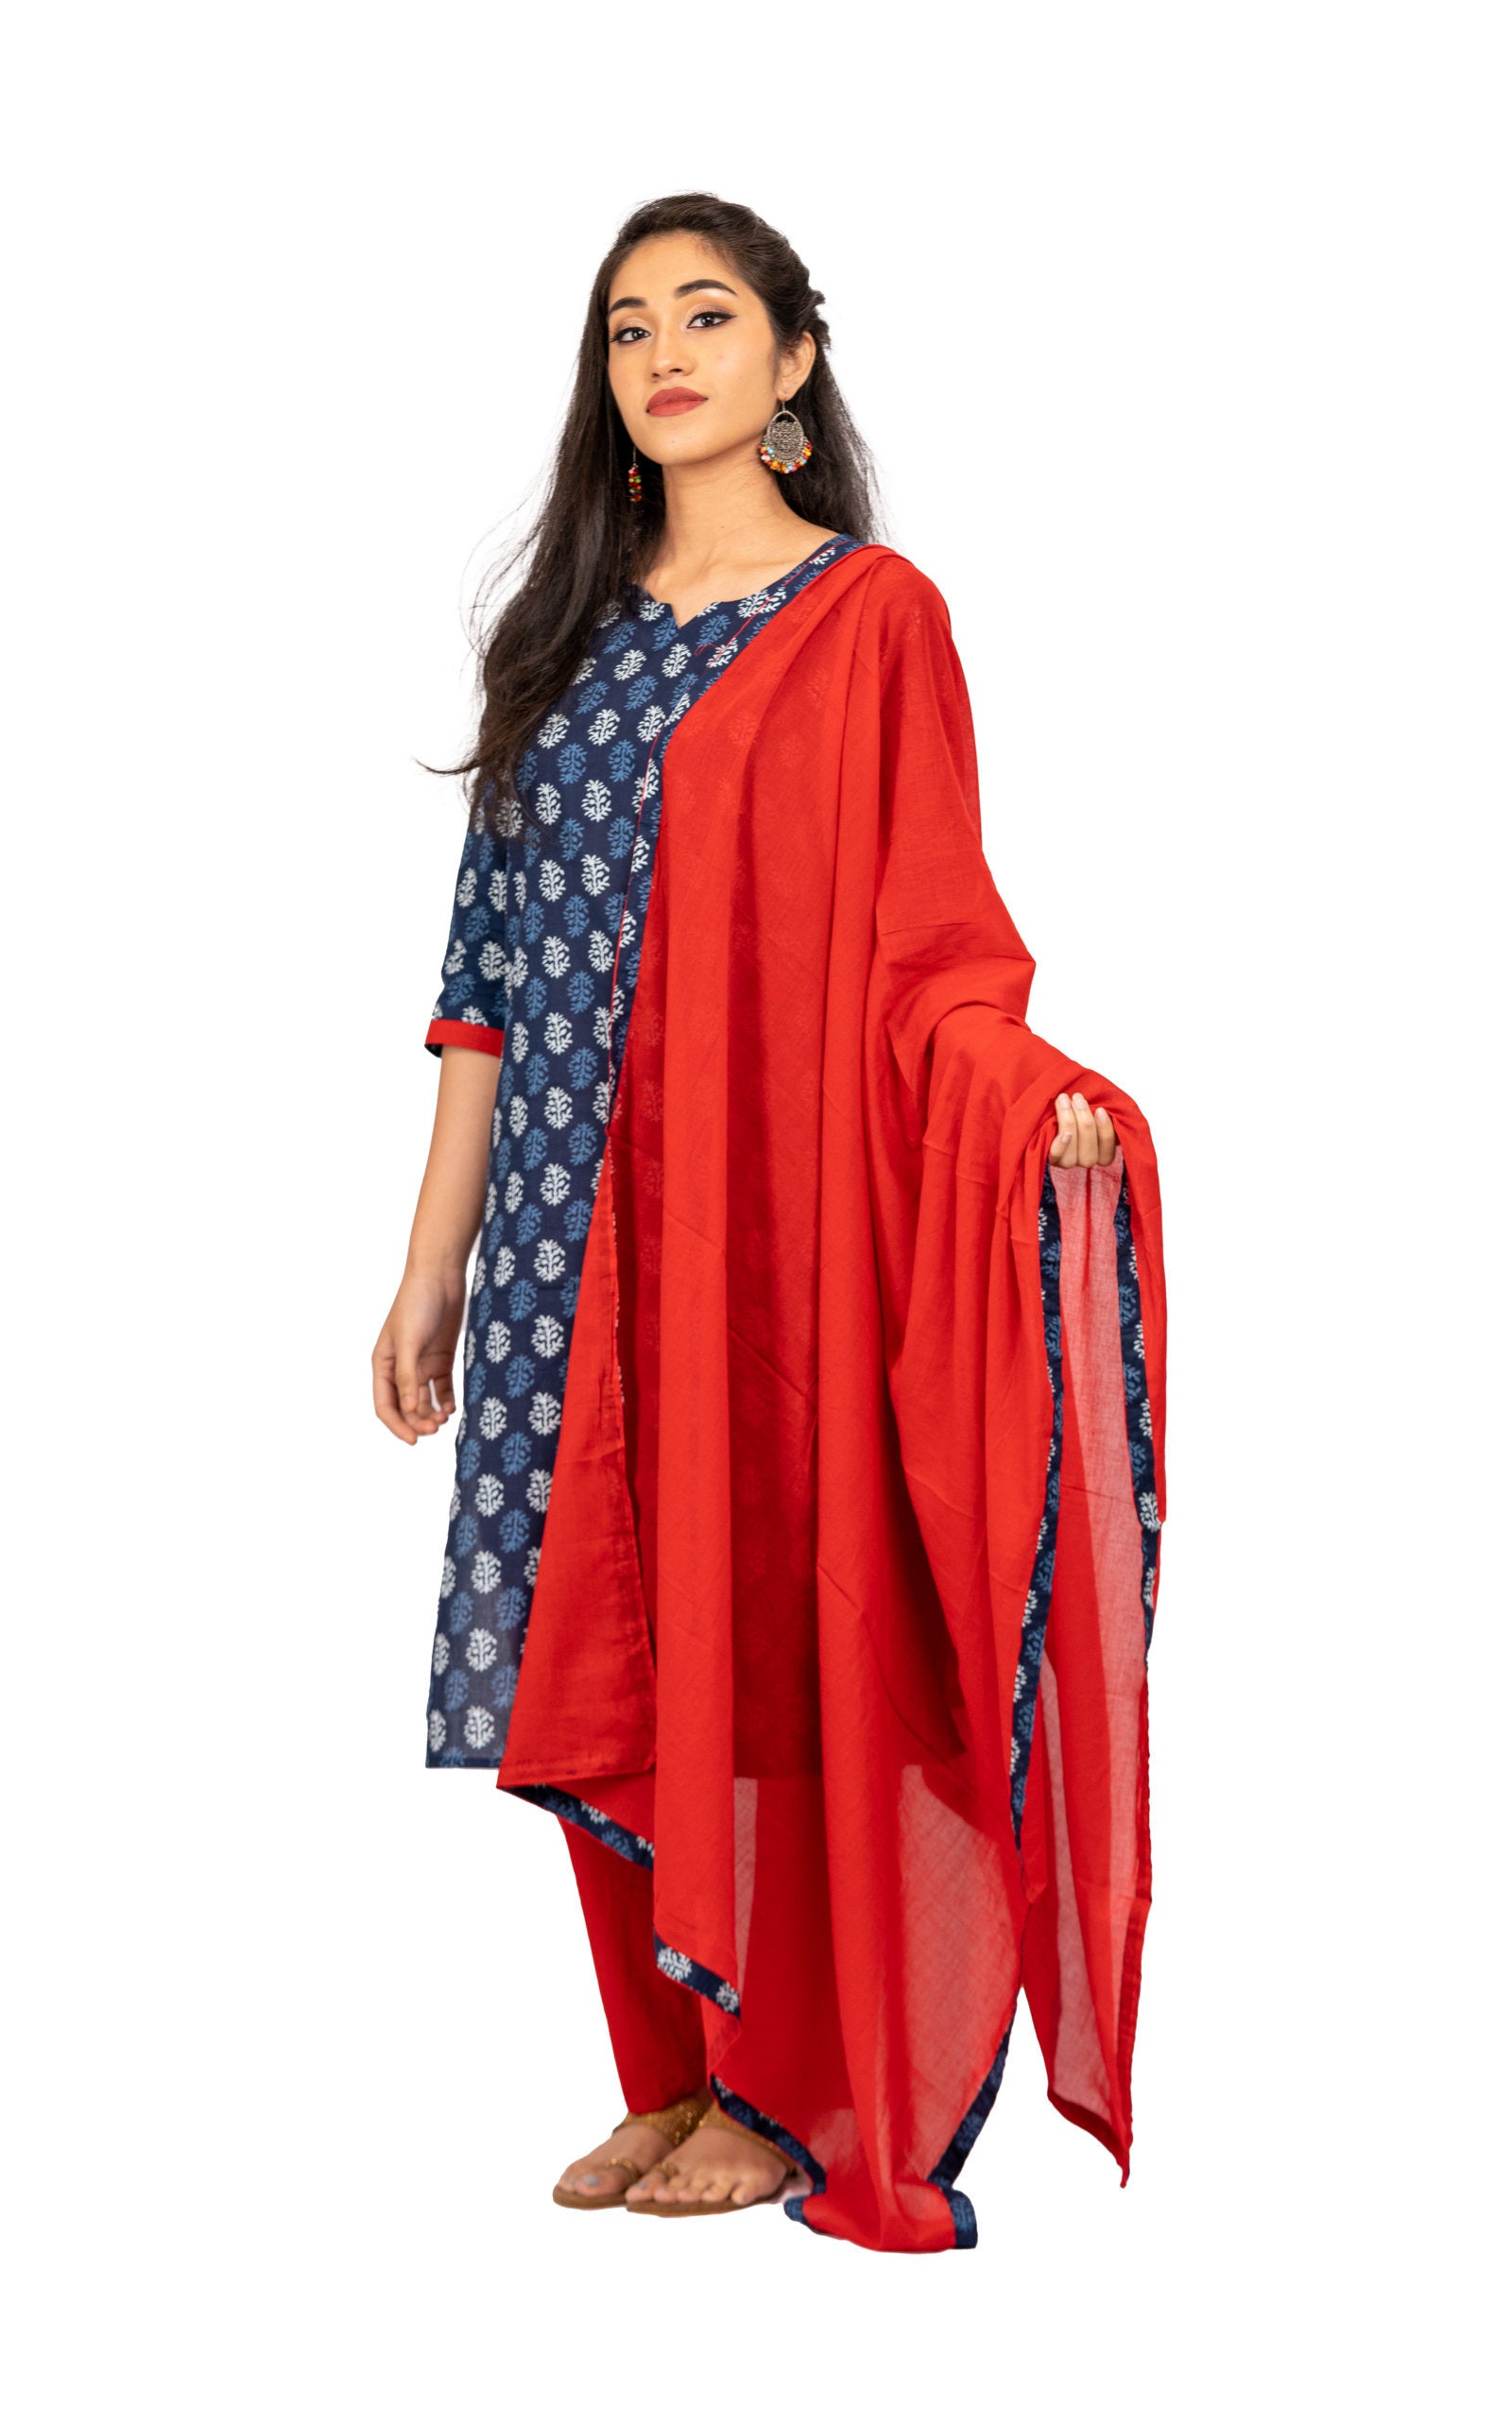 3 Piece Salwar - 100% Cotton indigo blue salwar with white and blue prints. Plain red 2 metre long dupatta with edge design matching the salwar fabric. Plain red pants matching the dupatta.